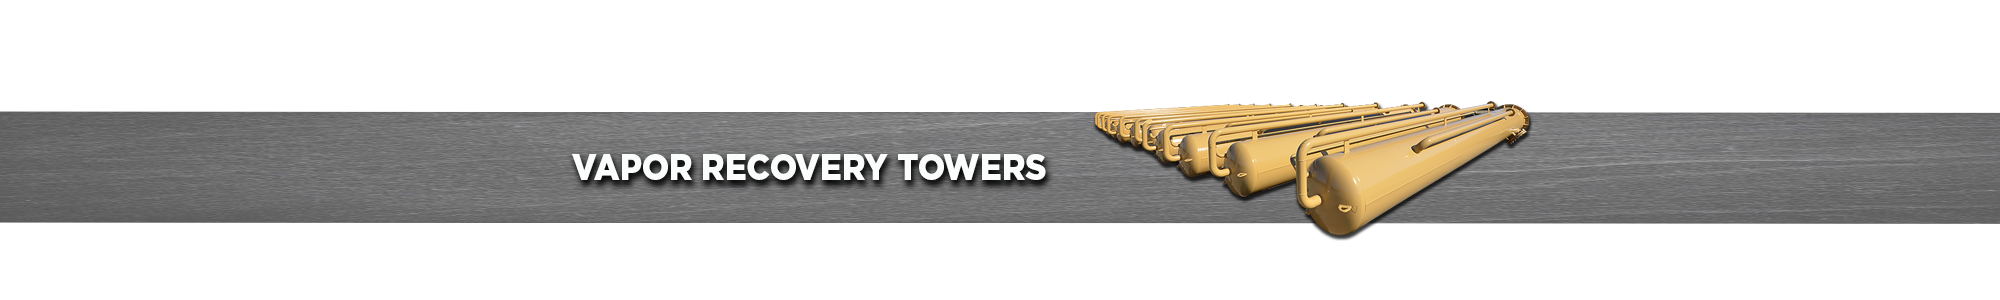 Vapor Recovery Towers